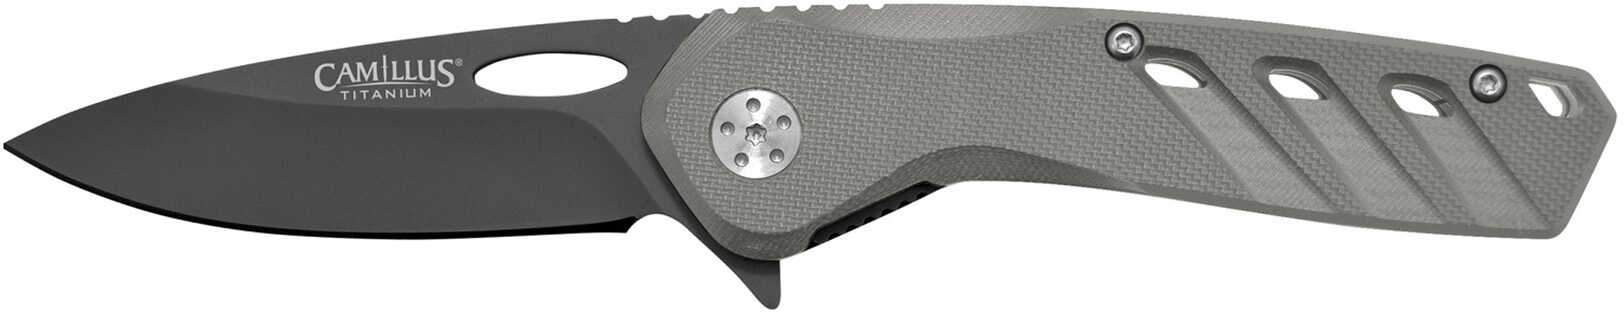 Camillus SLOT 6.75 inch Folding Knife 2.75 in Blade - Gray